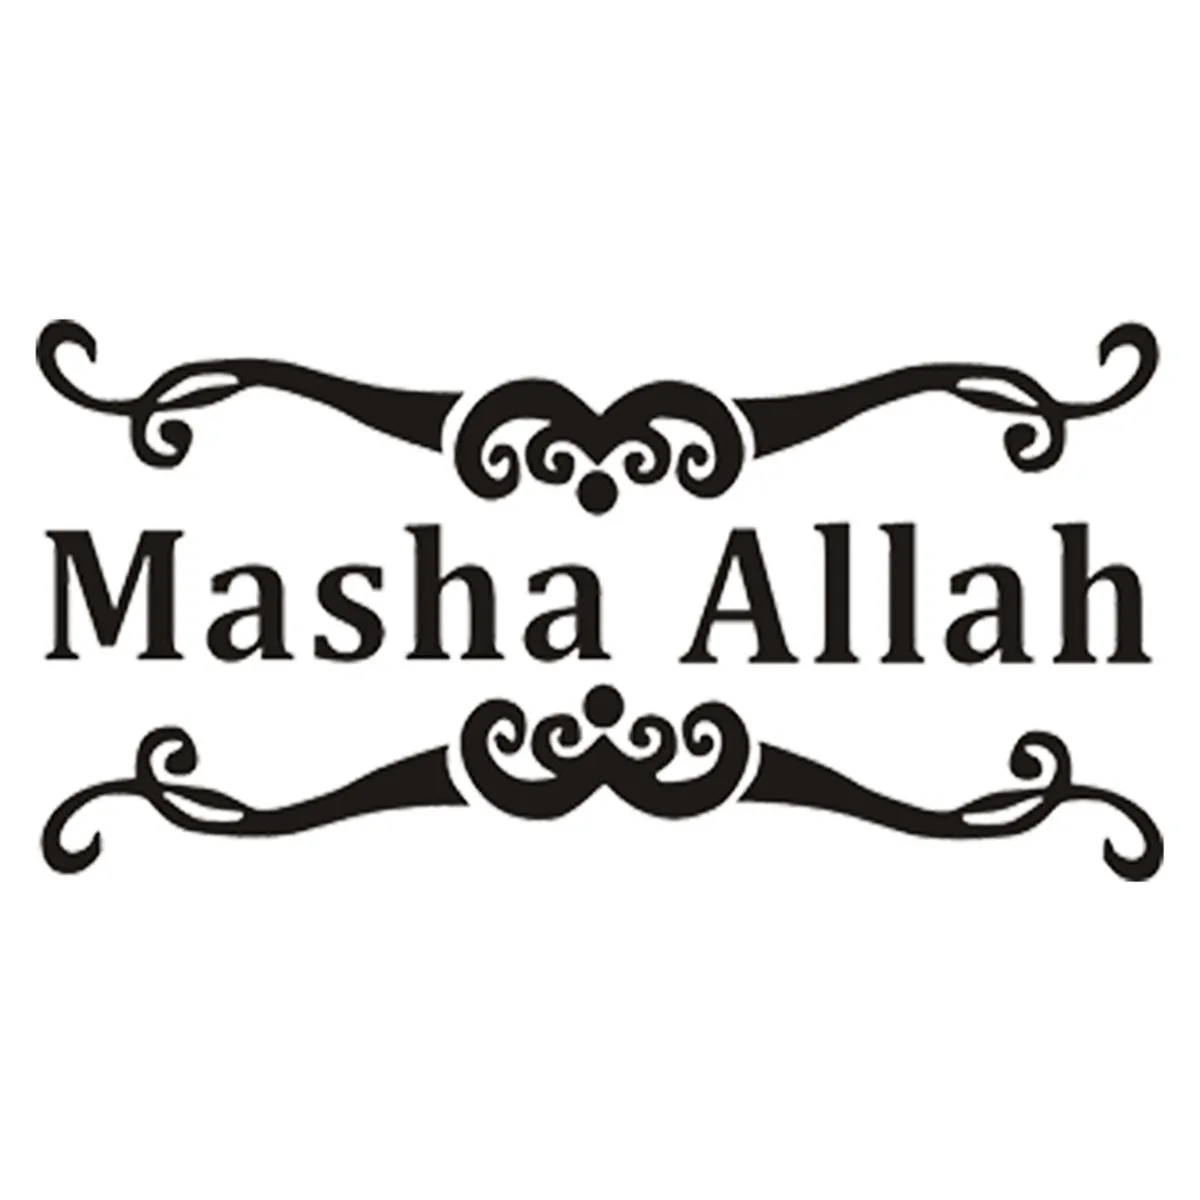 Mashallah png images | Klipartz